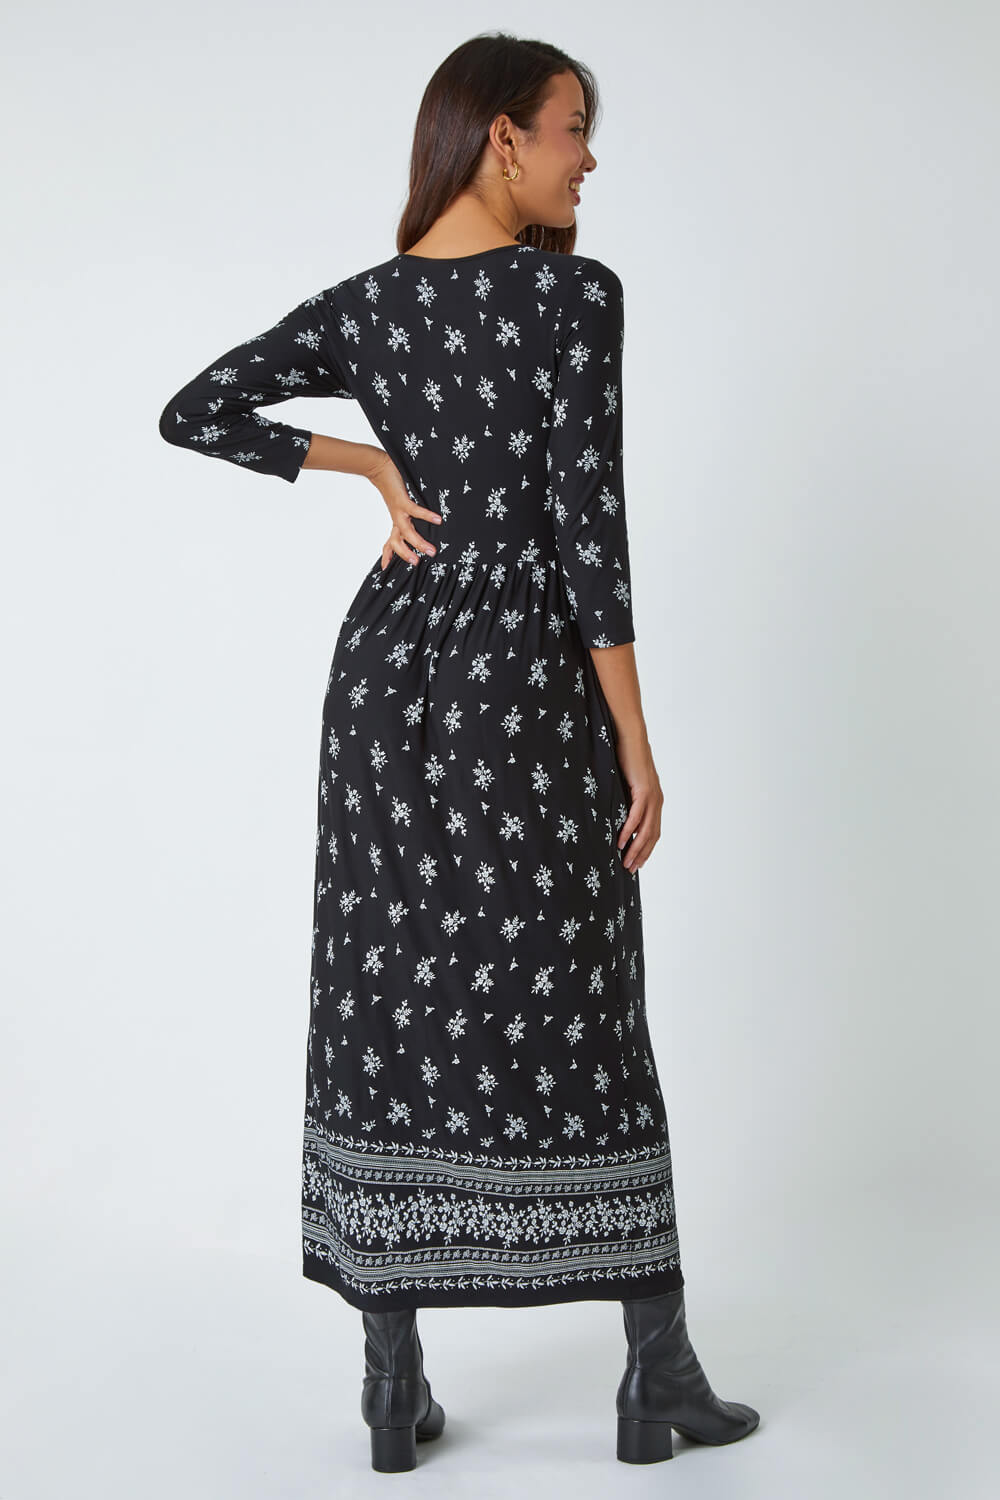 Black Floral Border Print Maxi Stretch Dress, Image 3 of 5